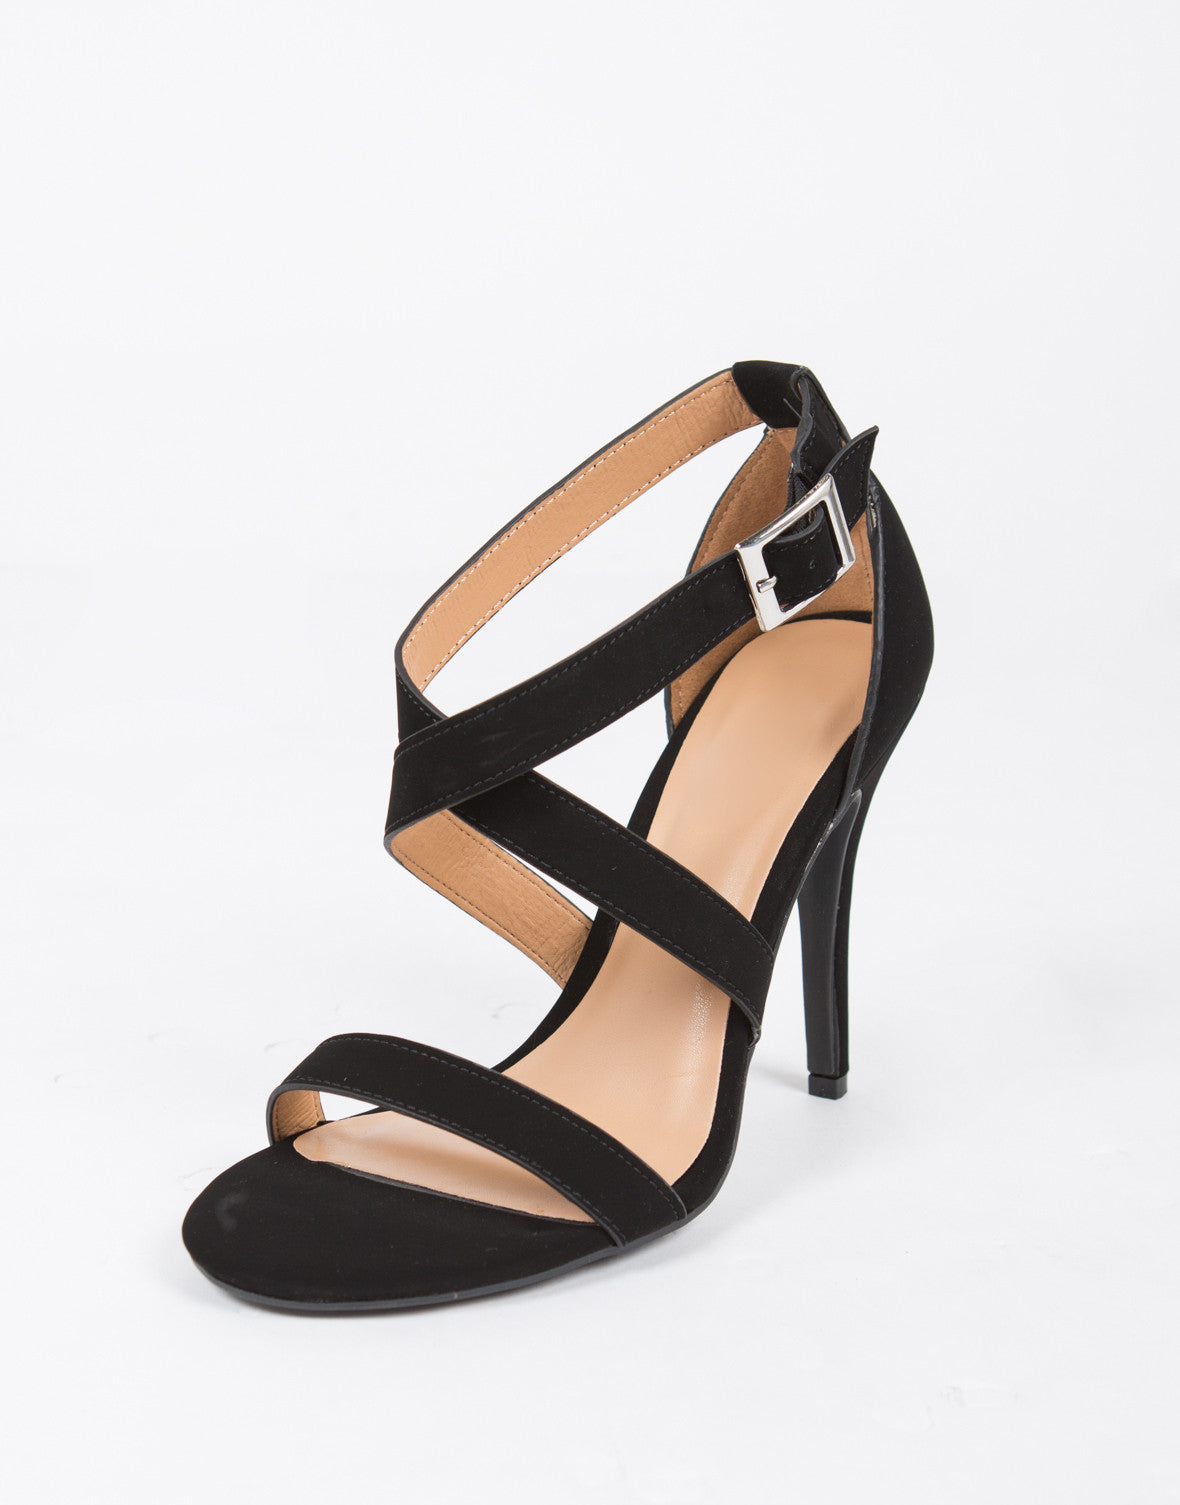 heels with cross straps